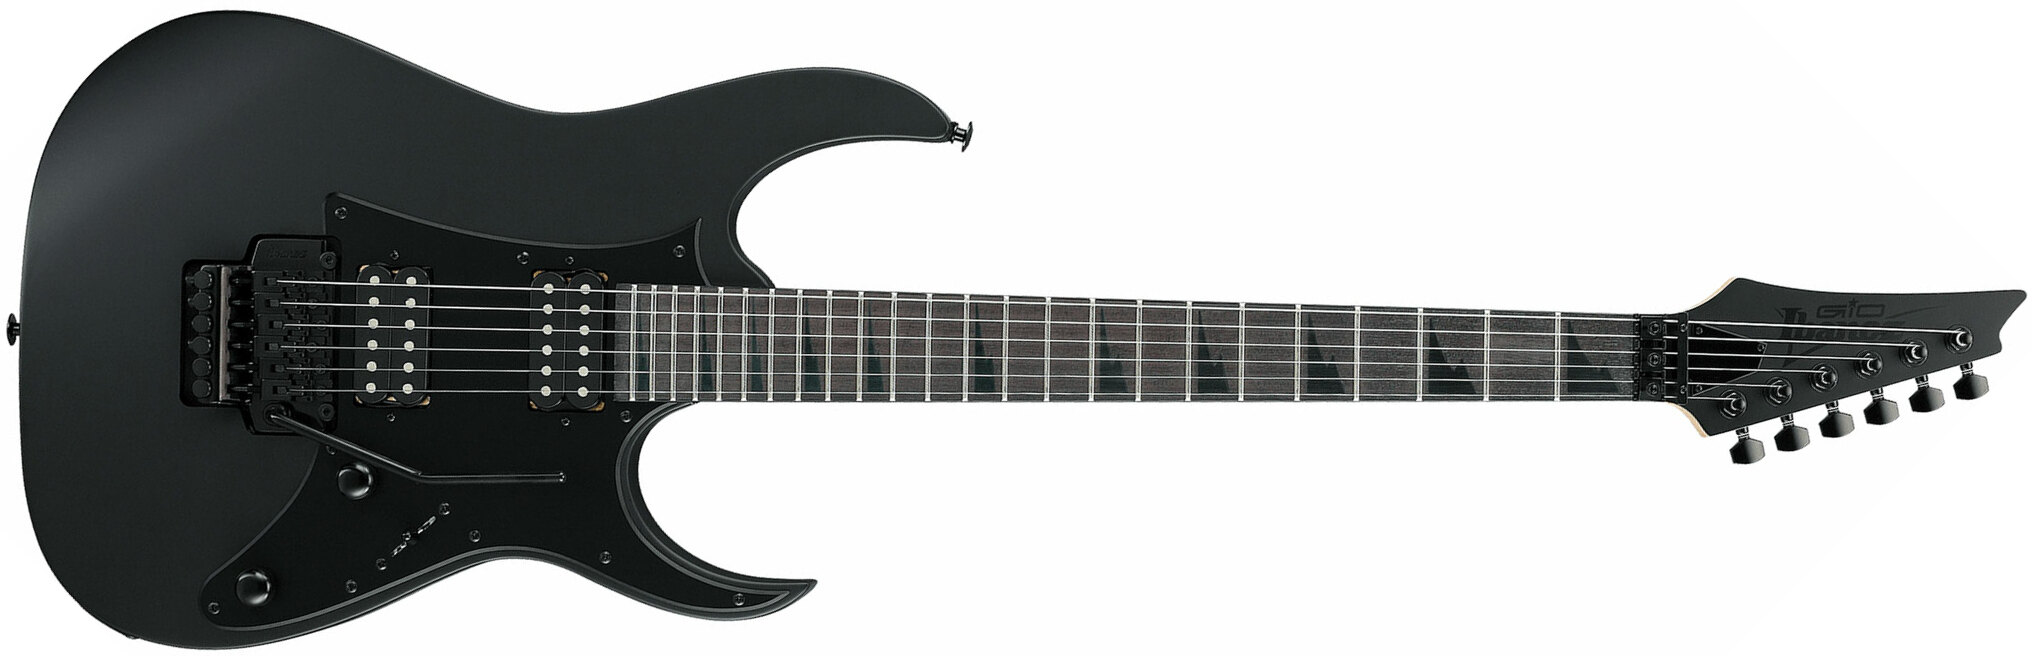 Ibanez Grgr330ex Bkf Gio 2h Fr Pur - Black Flat - Guitarra eléctrica con forma de str. - Main picture